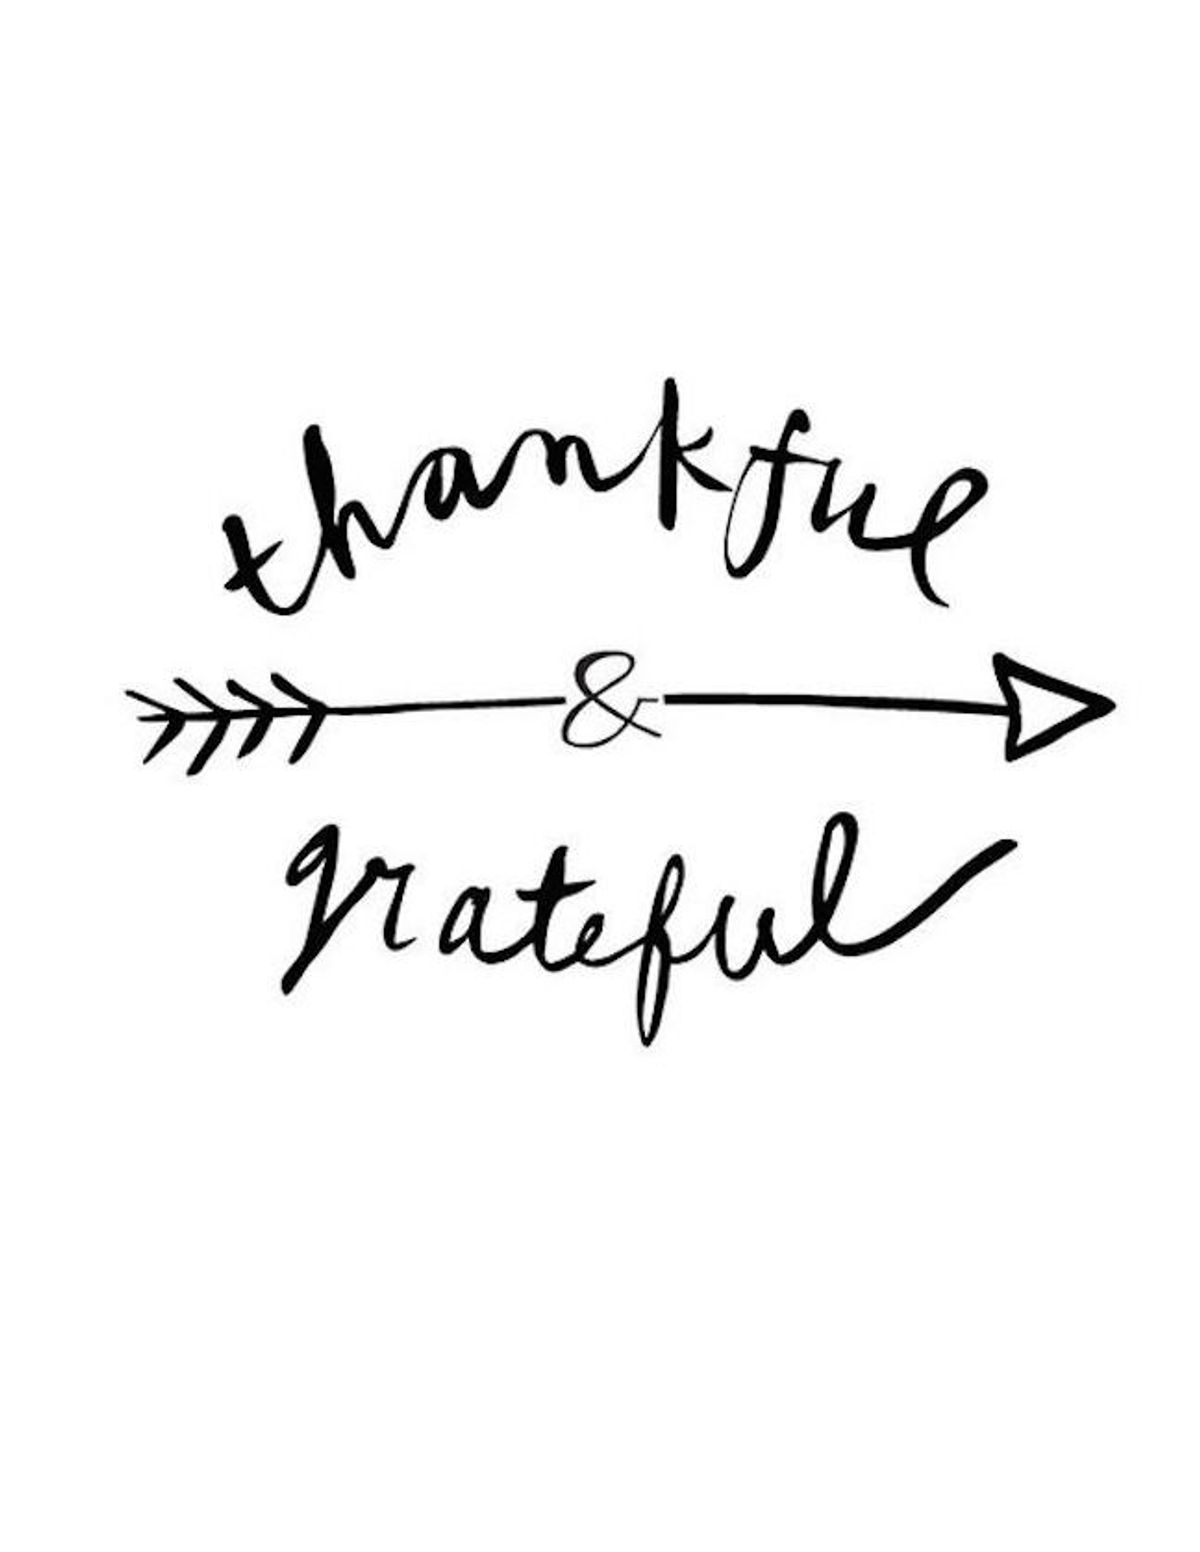 Truly Grateful